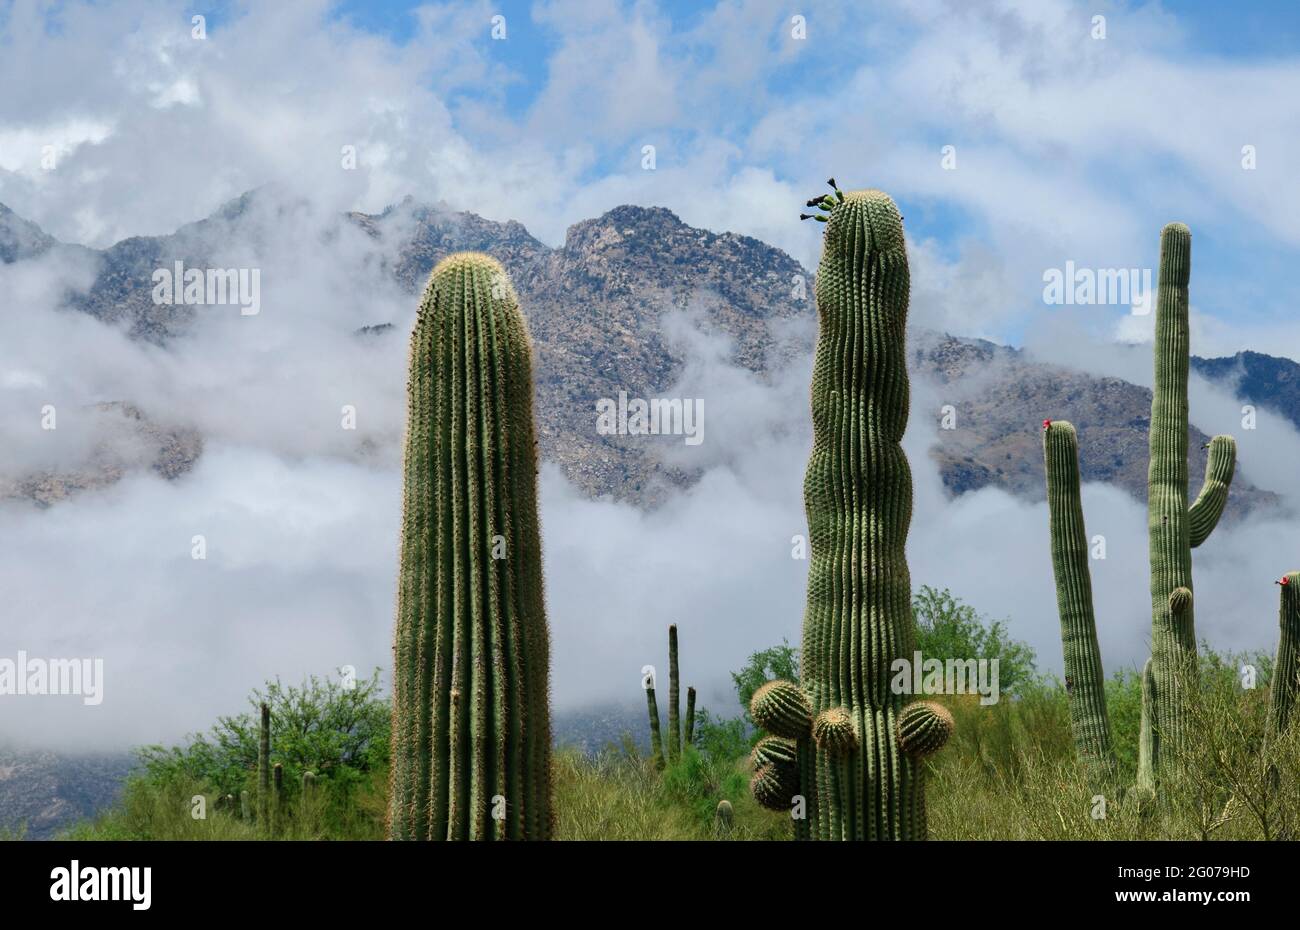 Saguaro cactus stand before the Santa Catalina Mountains shrouded in fog, Sonoran Desert, Tucson, Arizona, USA. Stock Photo